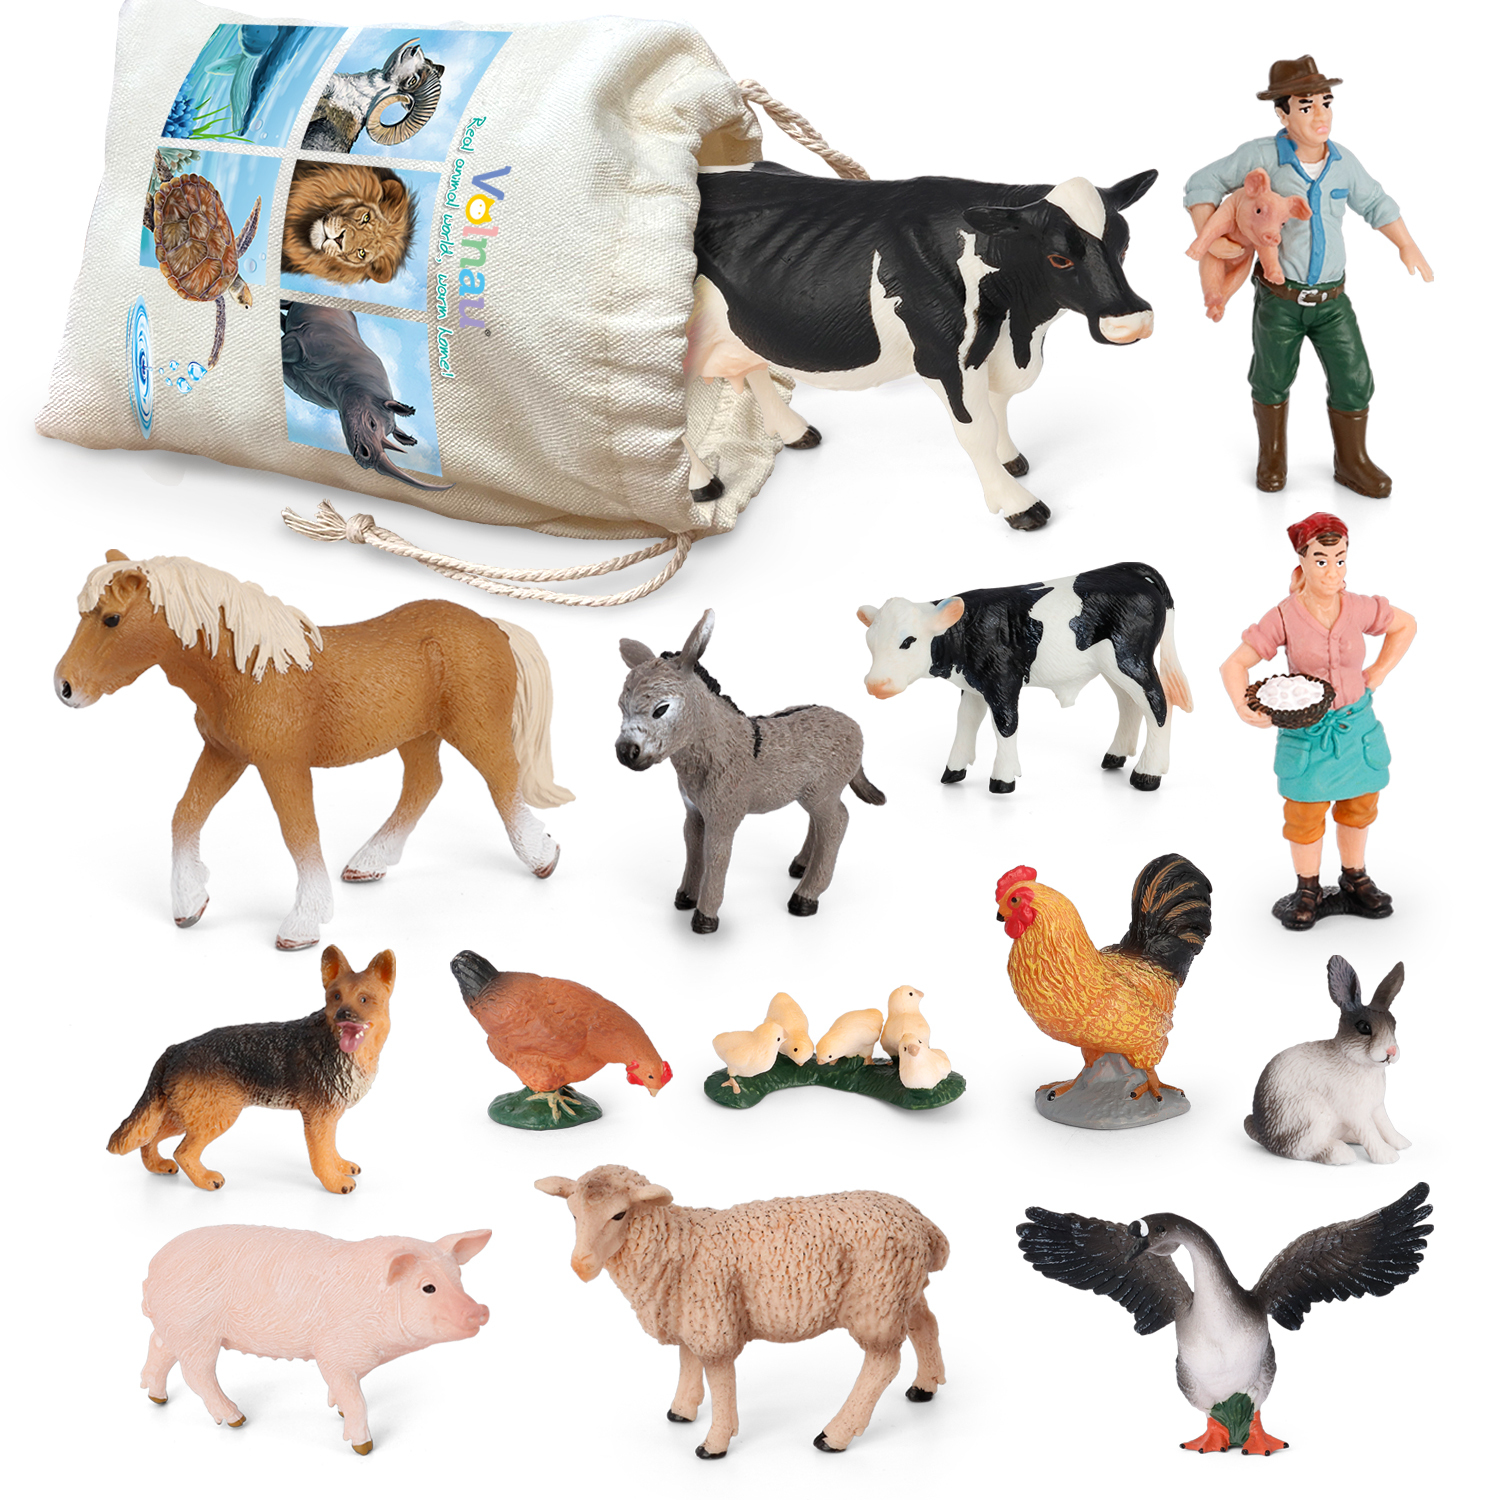 Educational Farm Animal Figures Playset with Farmer & 4 Cows Kids Toys Gift 